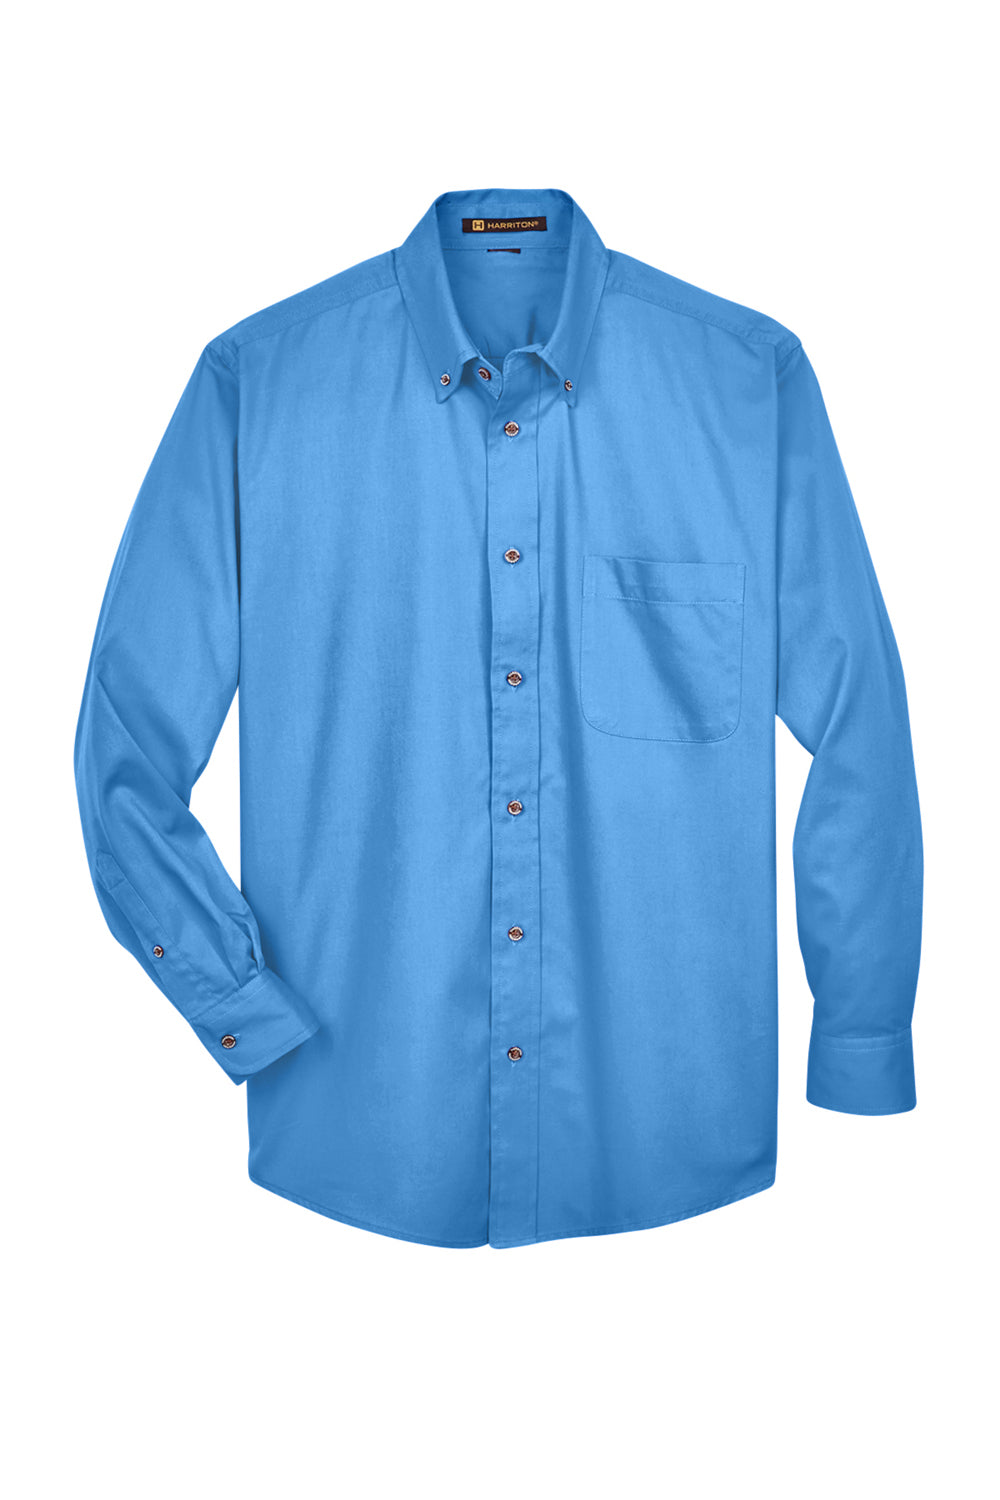 Harriton M500/M500T Wrinkle Resistant Long Sleeve Button Down Shirt w/ Pocket Nautical Blue Flat Front